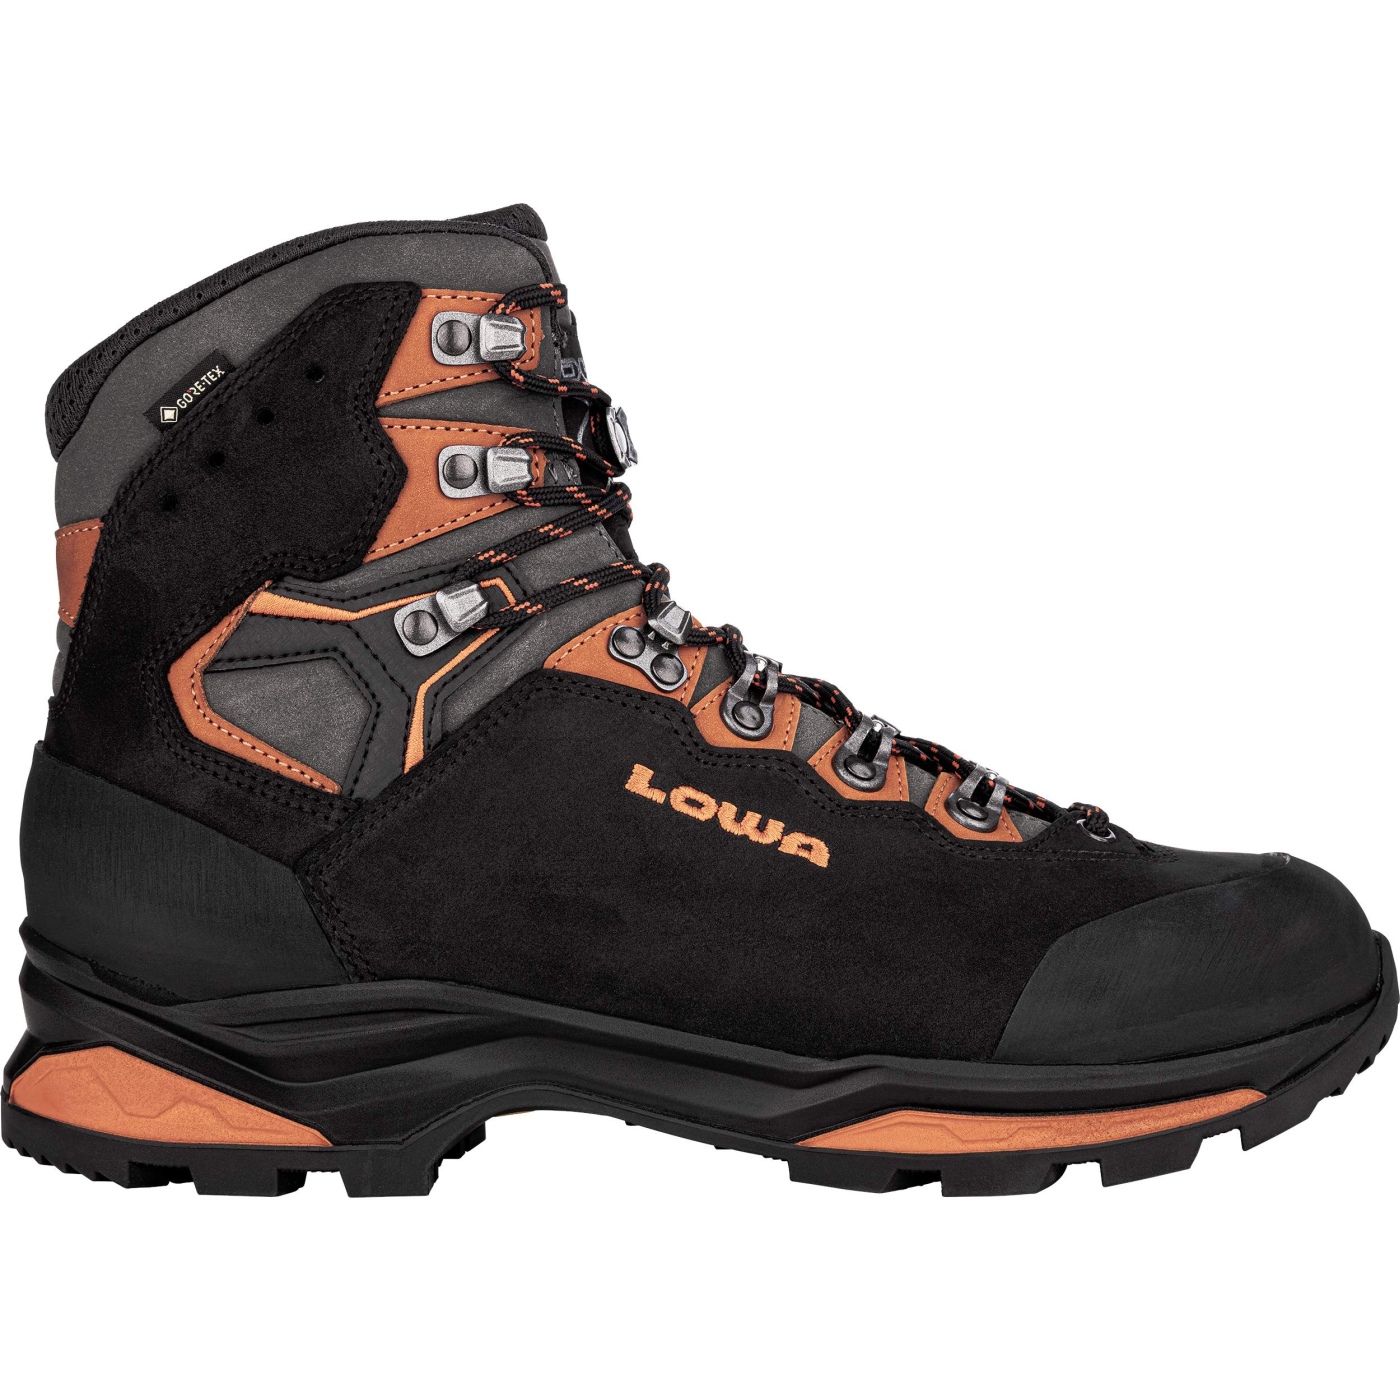 Produktbild von LOWA Camino Evo GTX Herren Trekkingschuhe - schwarz/orange